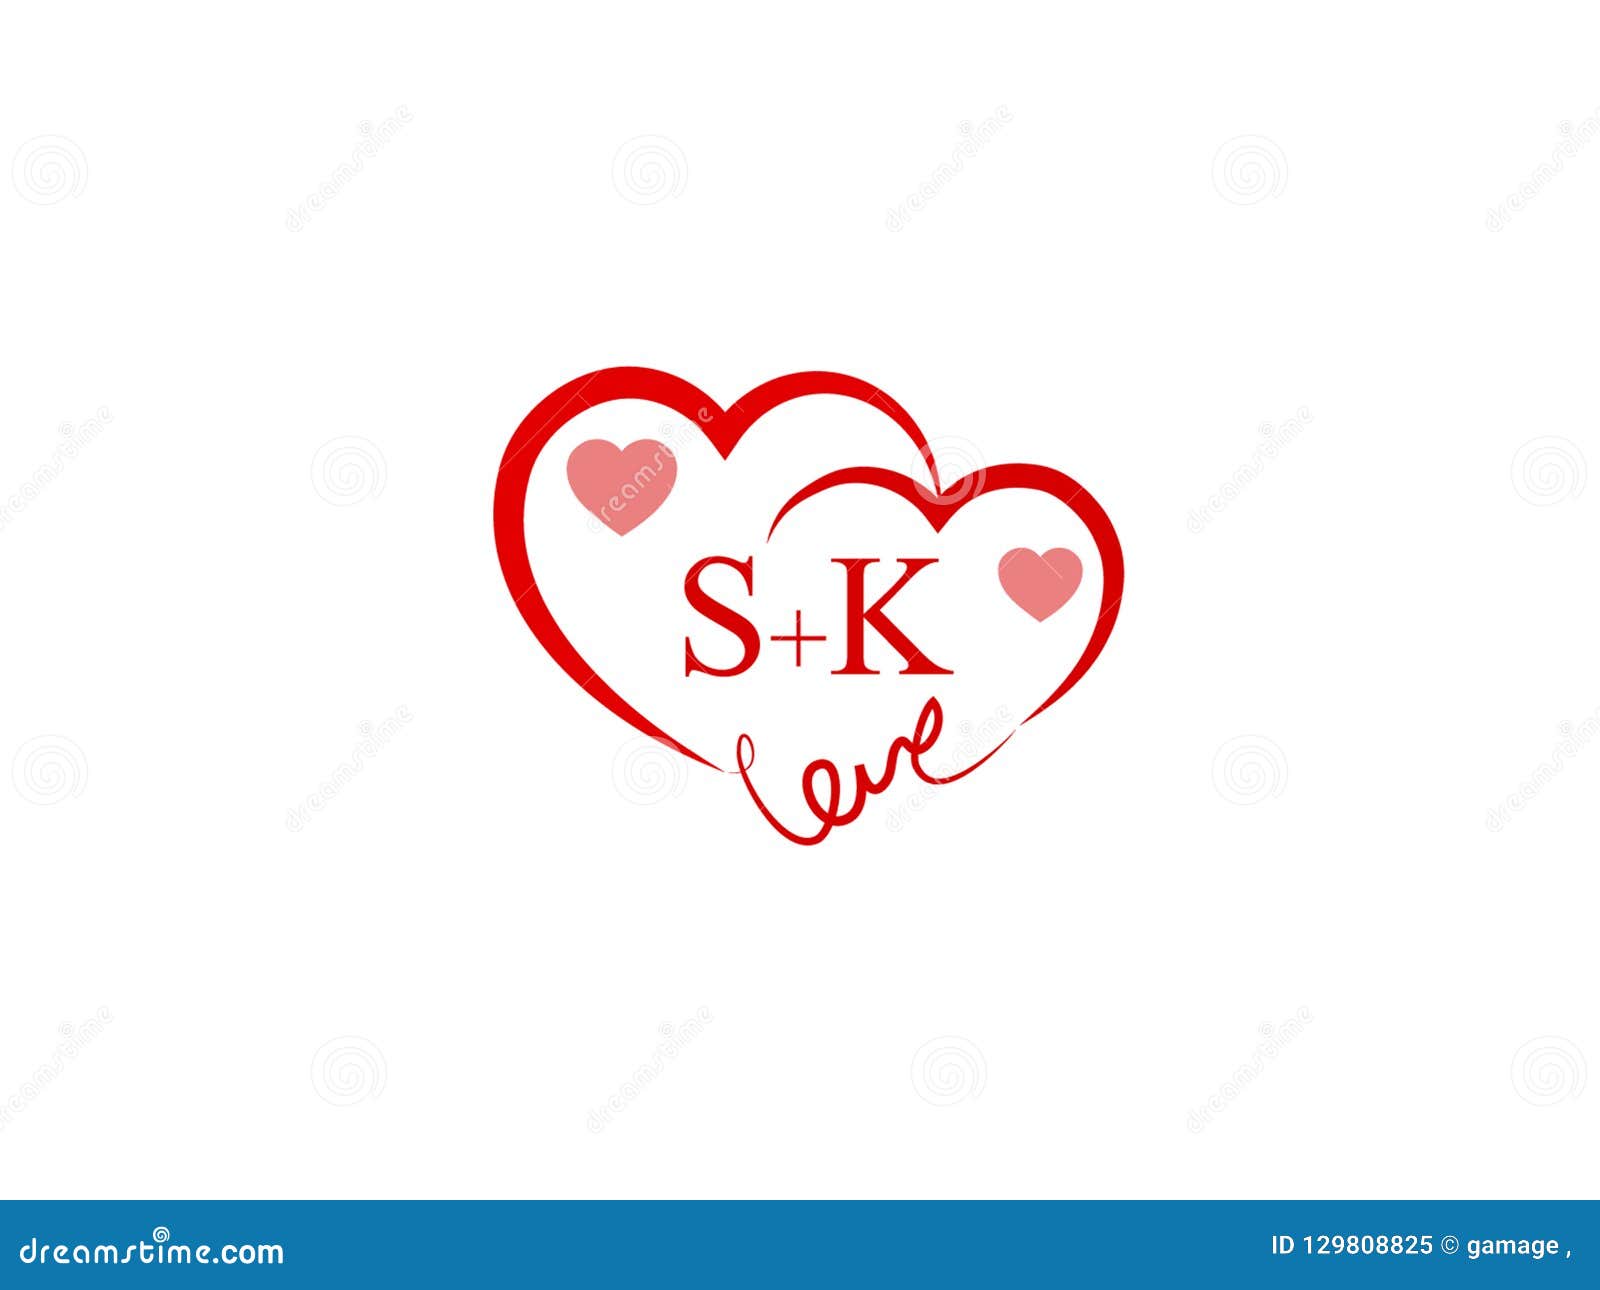 I love sk